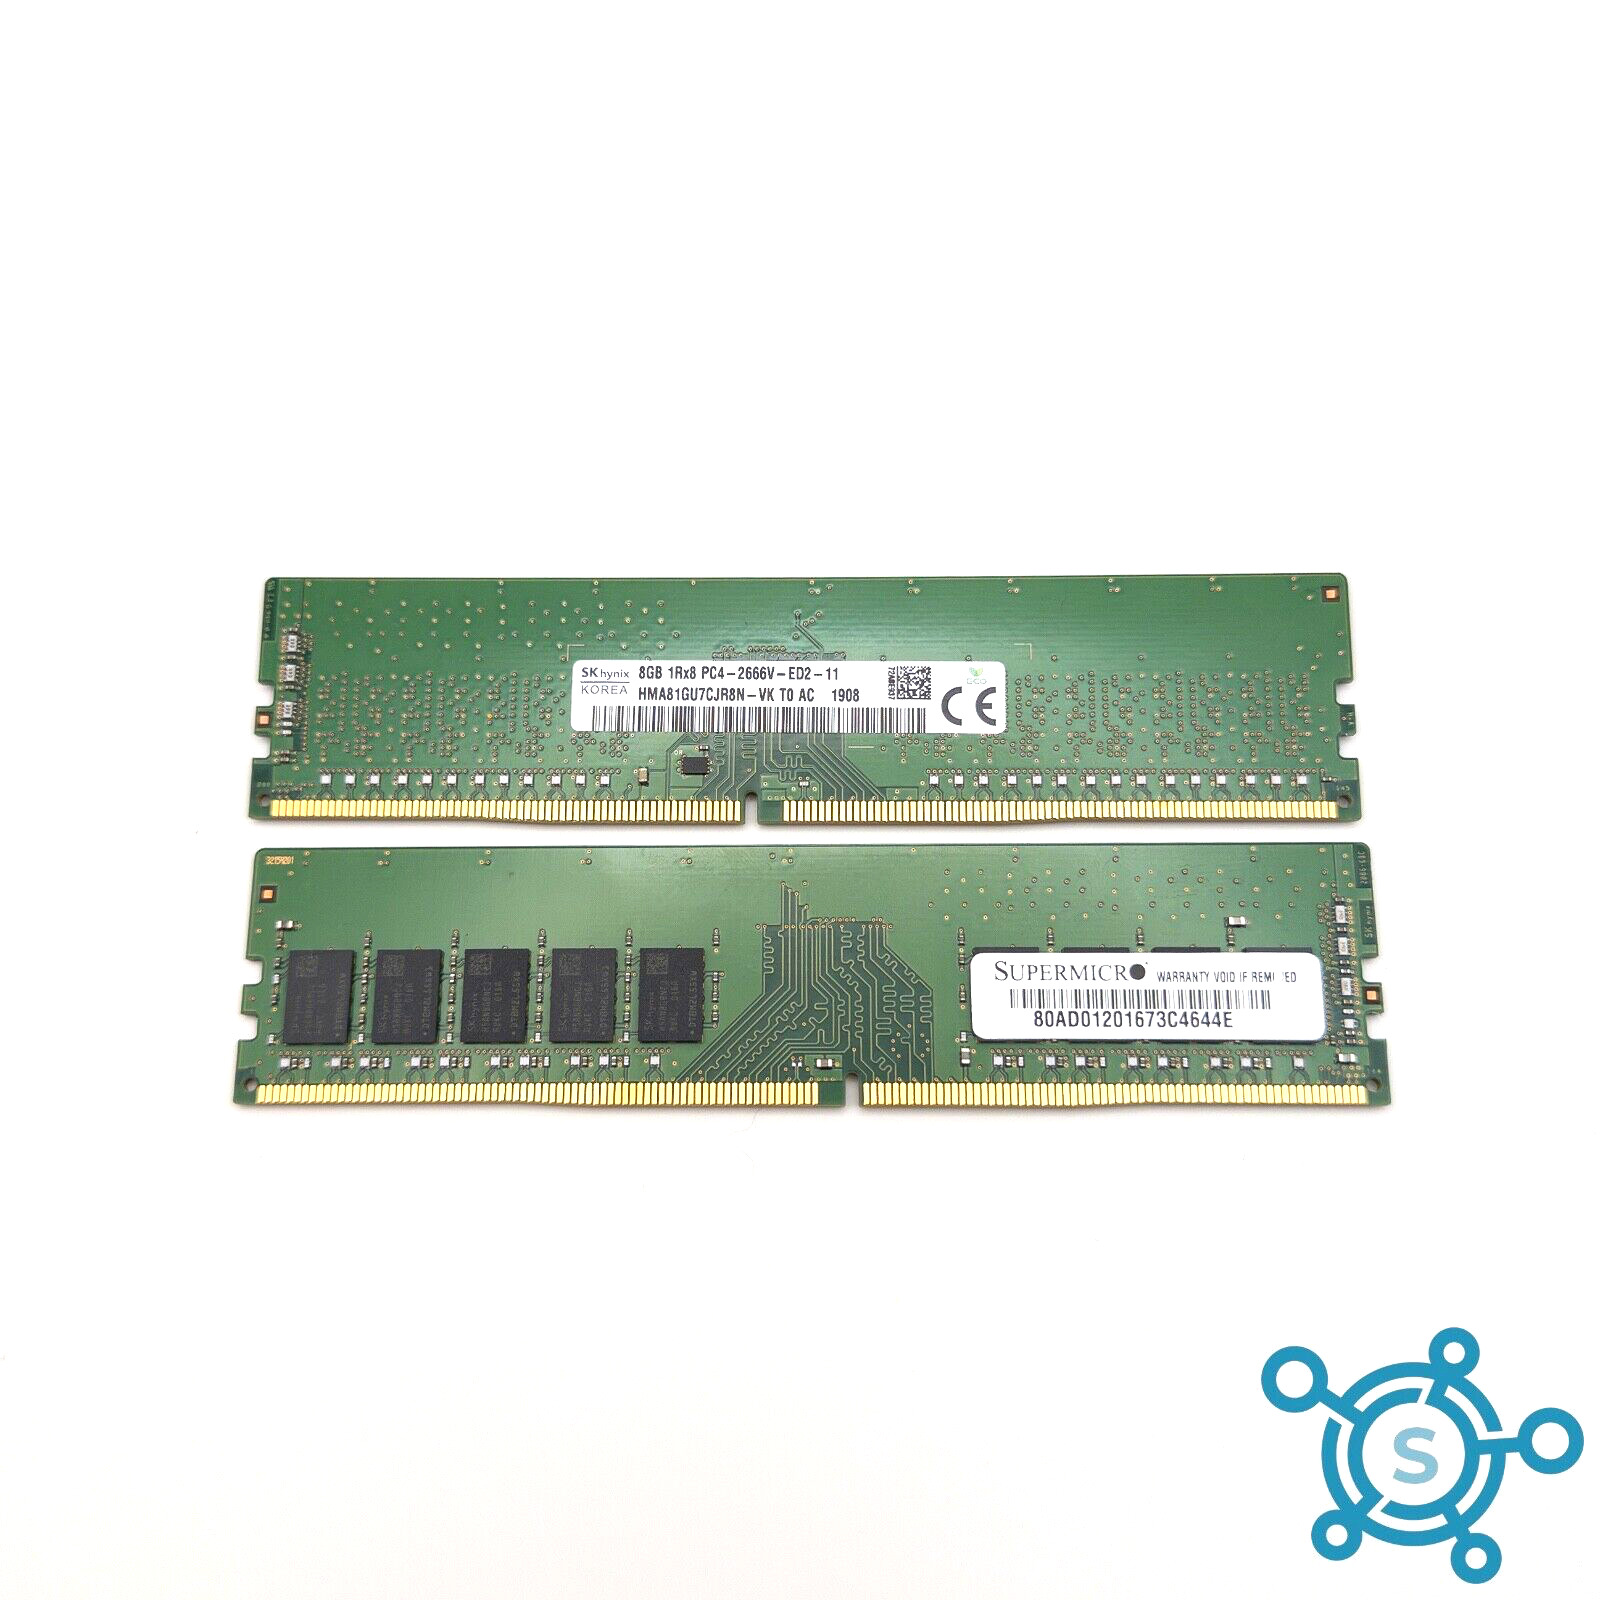 SK hynix 16GB DDR4 PC4-2666V ECC UDIMM (2x 8GB)  HMA81GU7CJR8N-VK Unbuffered ECC